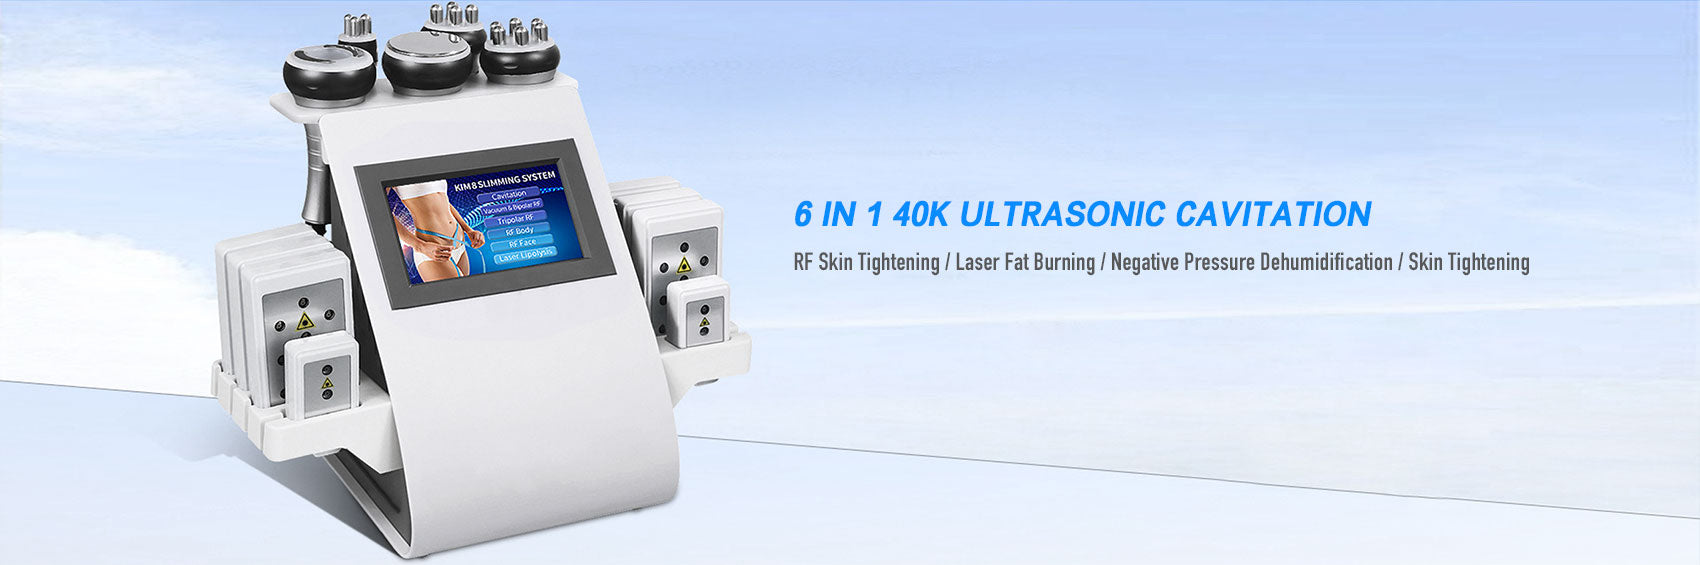 6 In 1 40K Ultrasonic Cavitation RF Body Slimming Machine